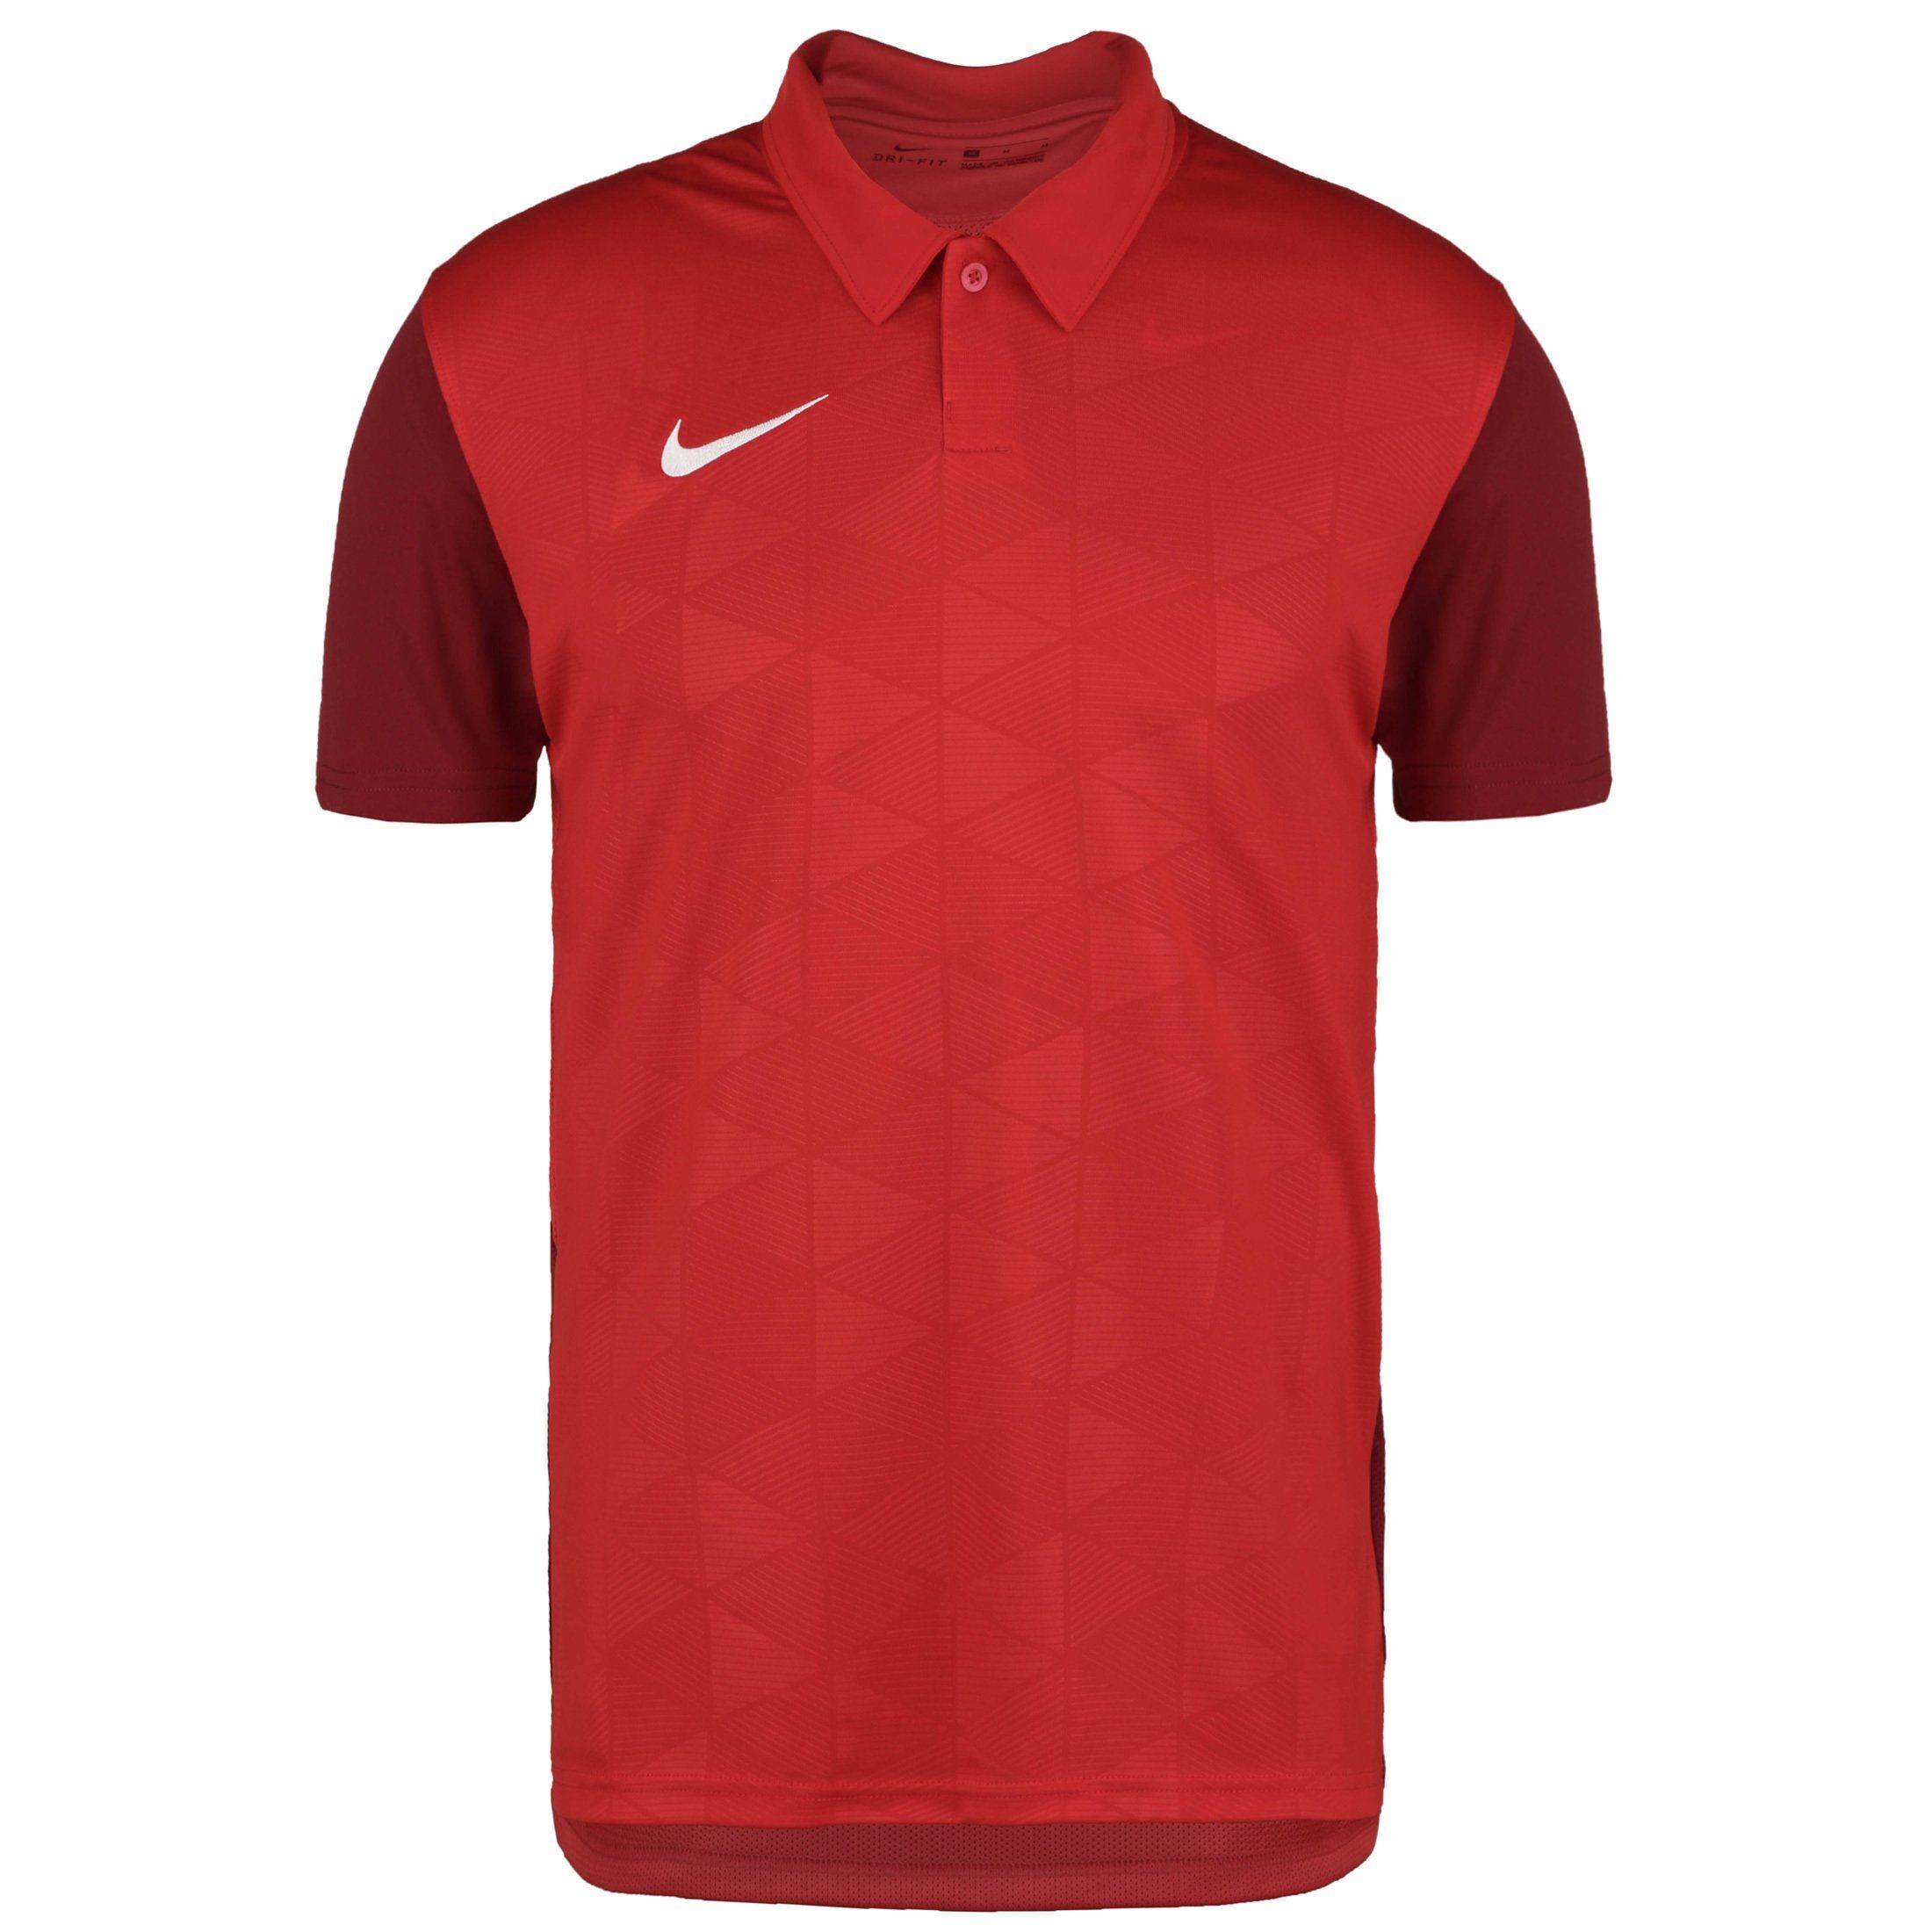 Nike Fußballtrikot »Trophy Iv Jersey«, university red / team red / white